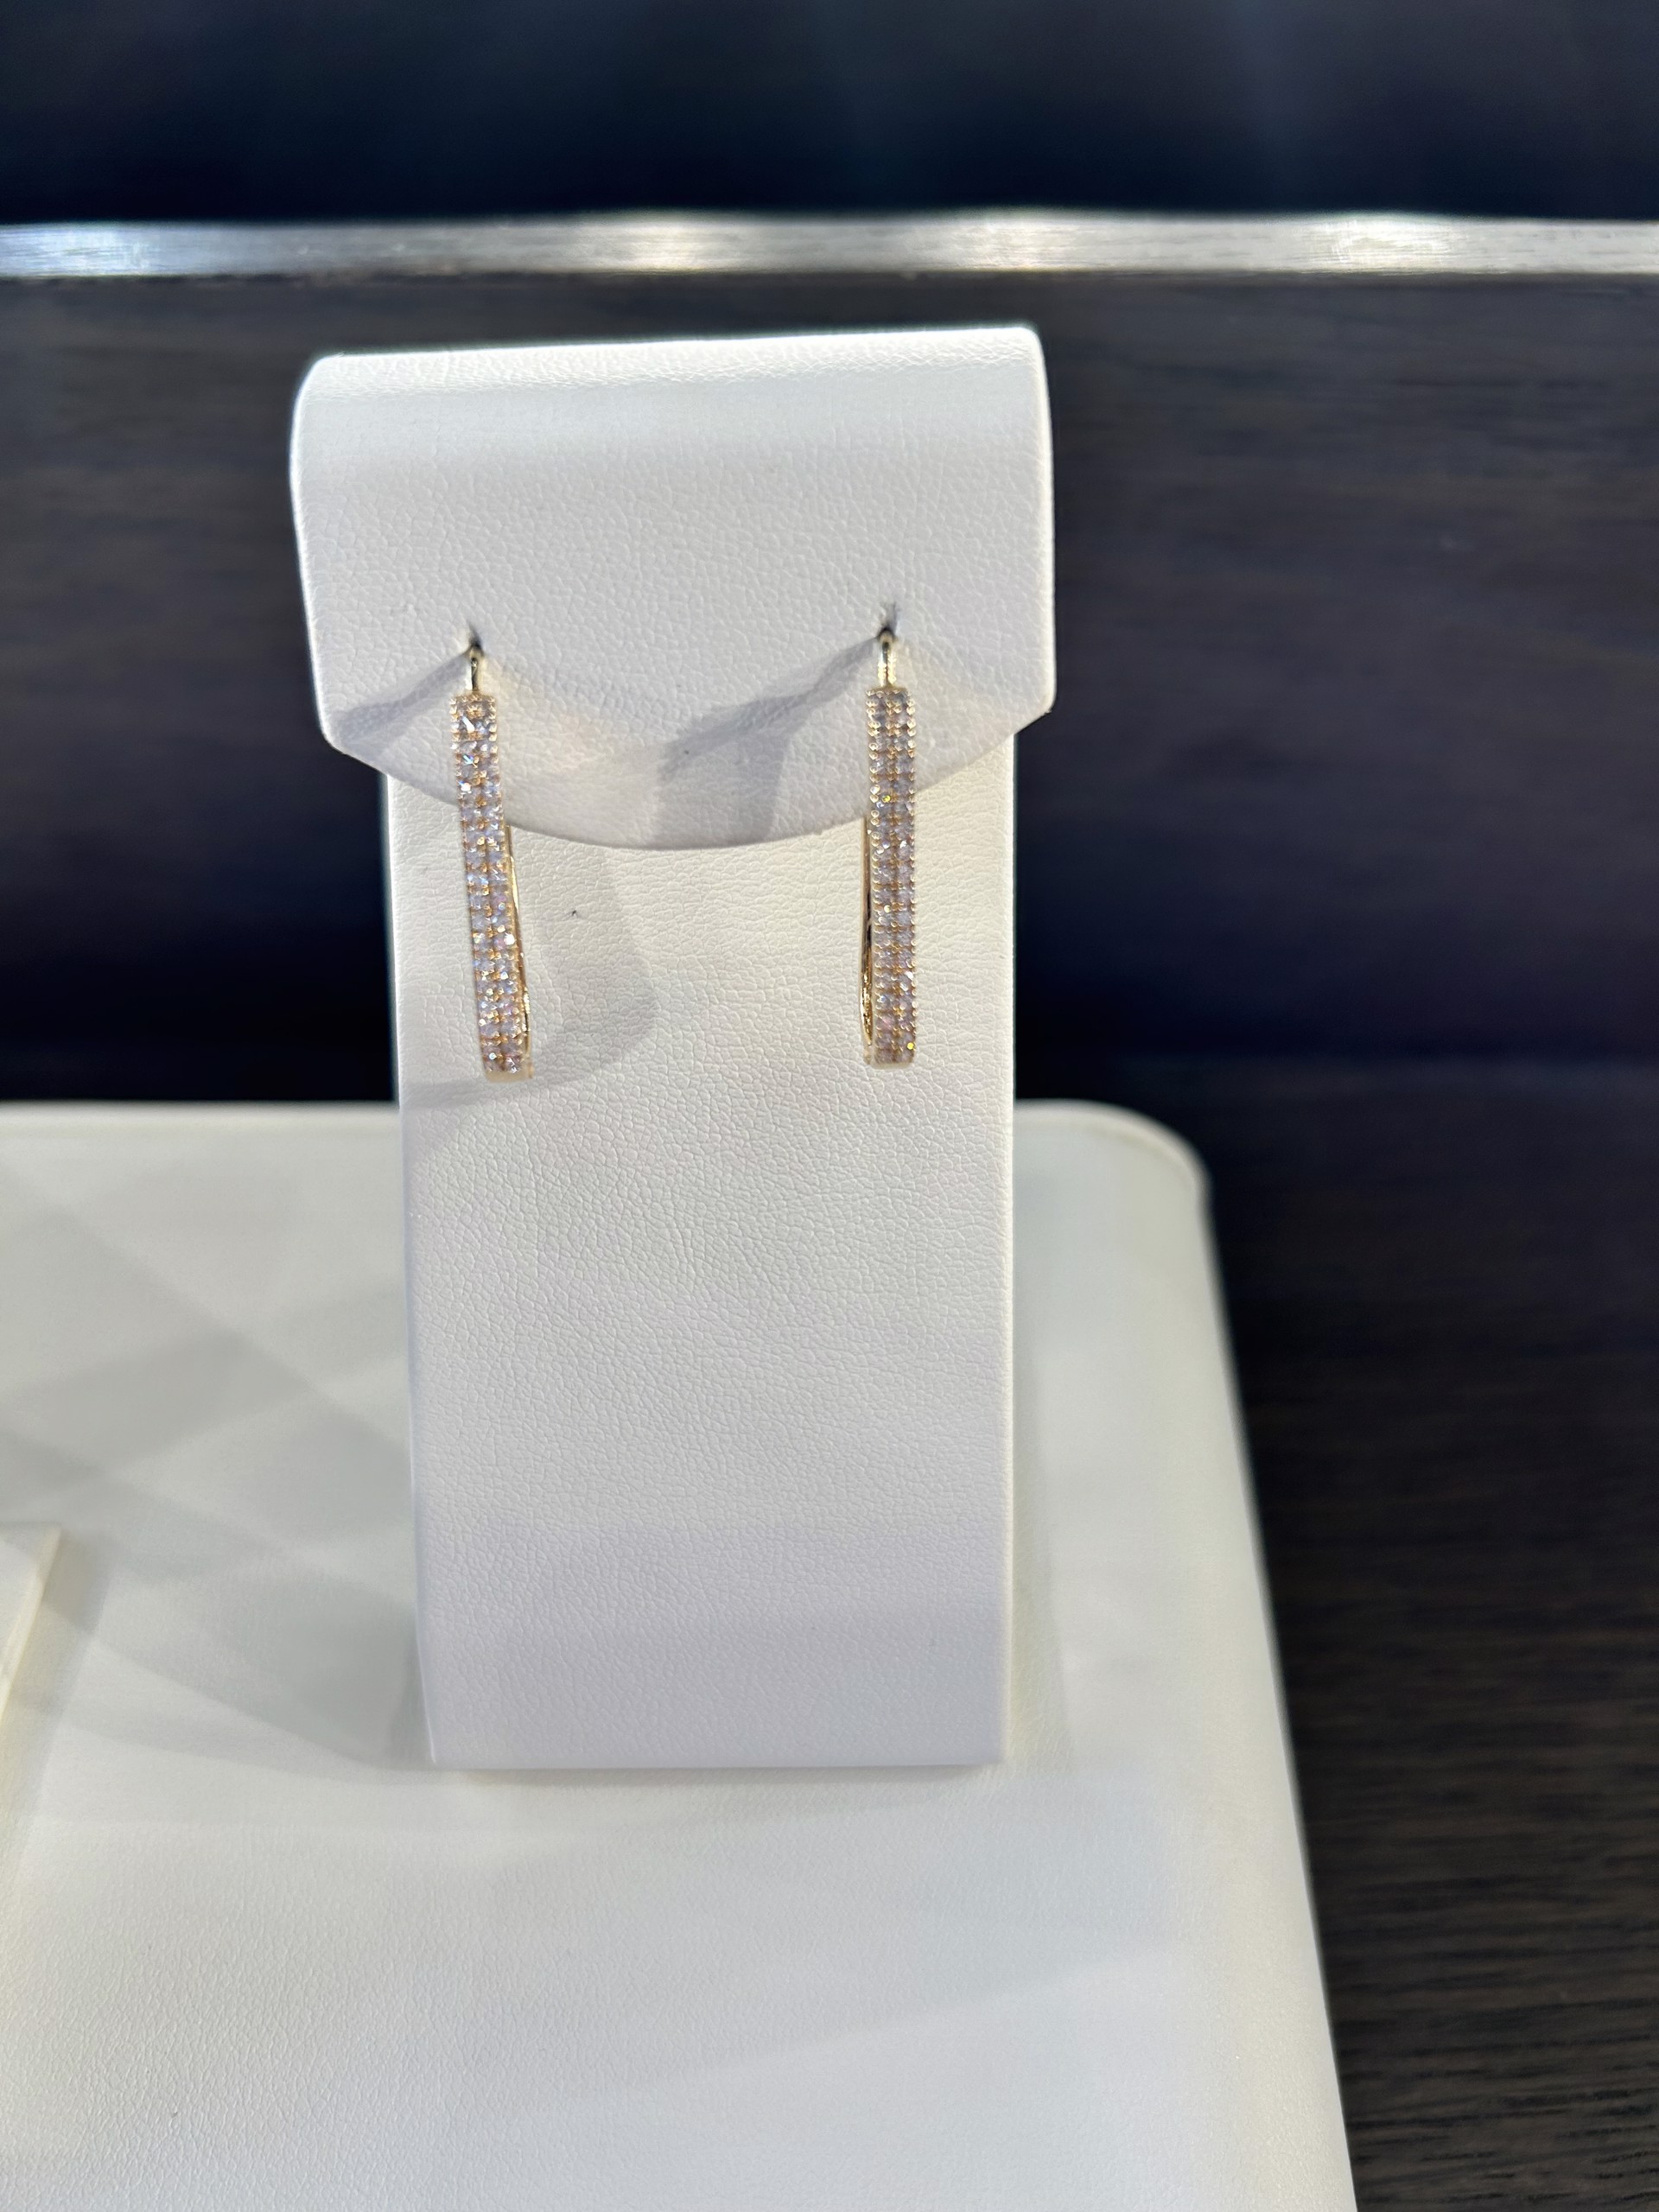 KB-E7 14k gold paper clip earrings with pave diamonds by Karen Birchmier